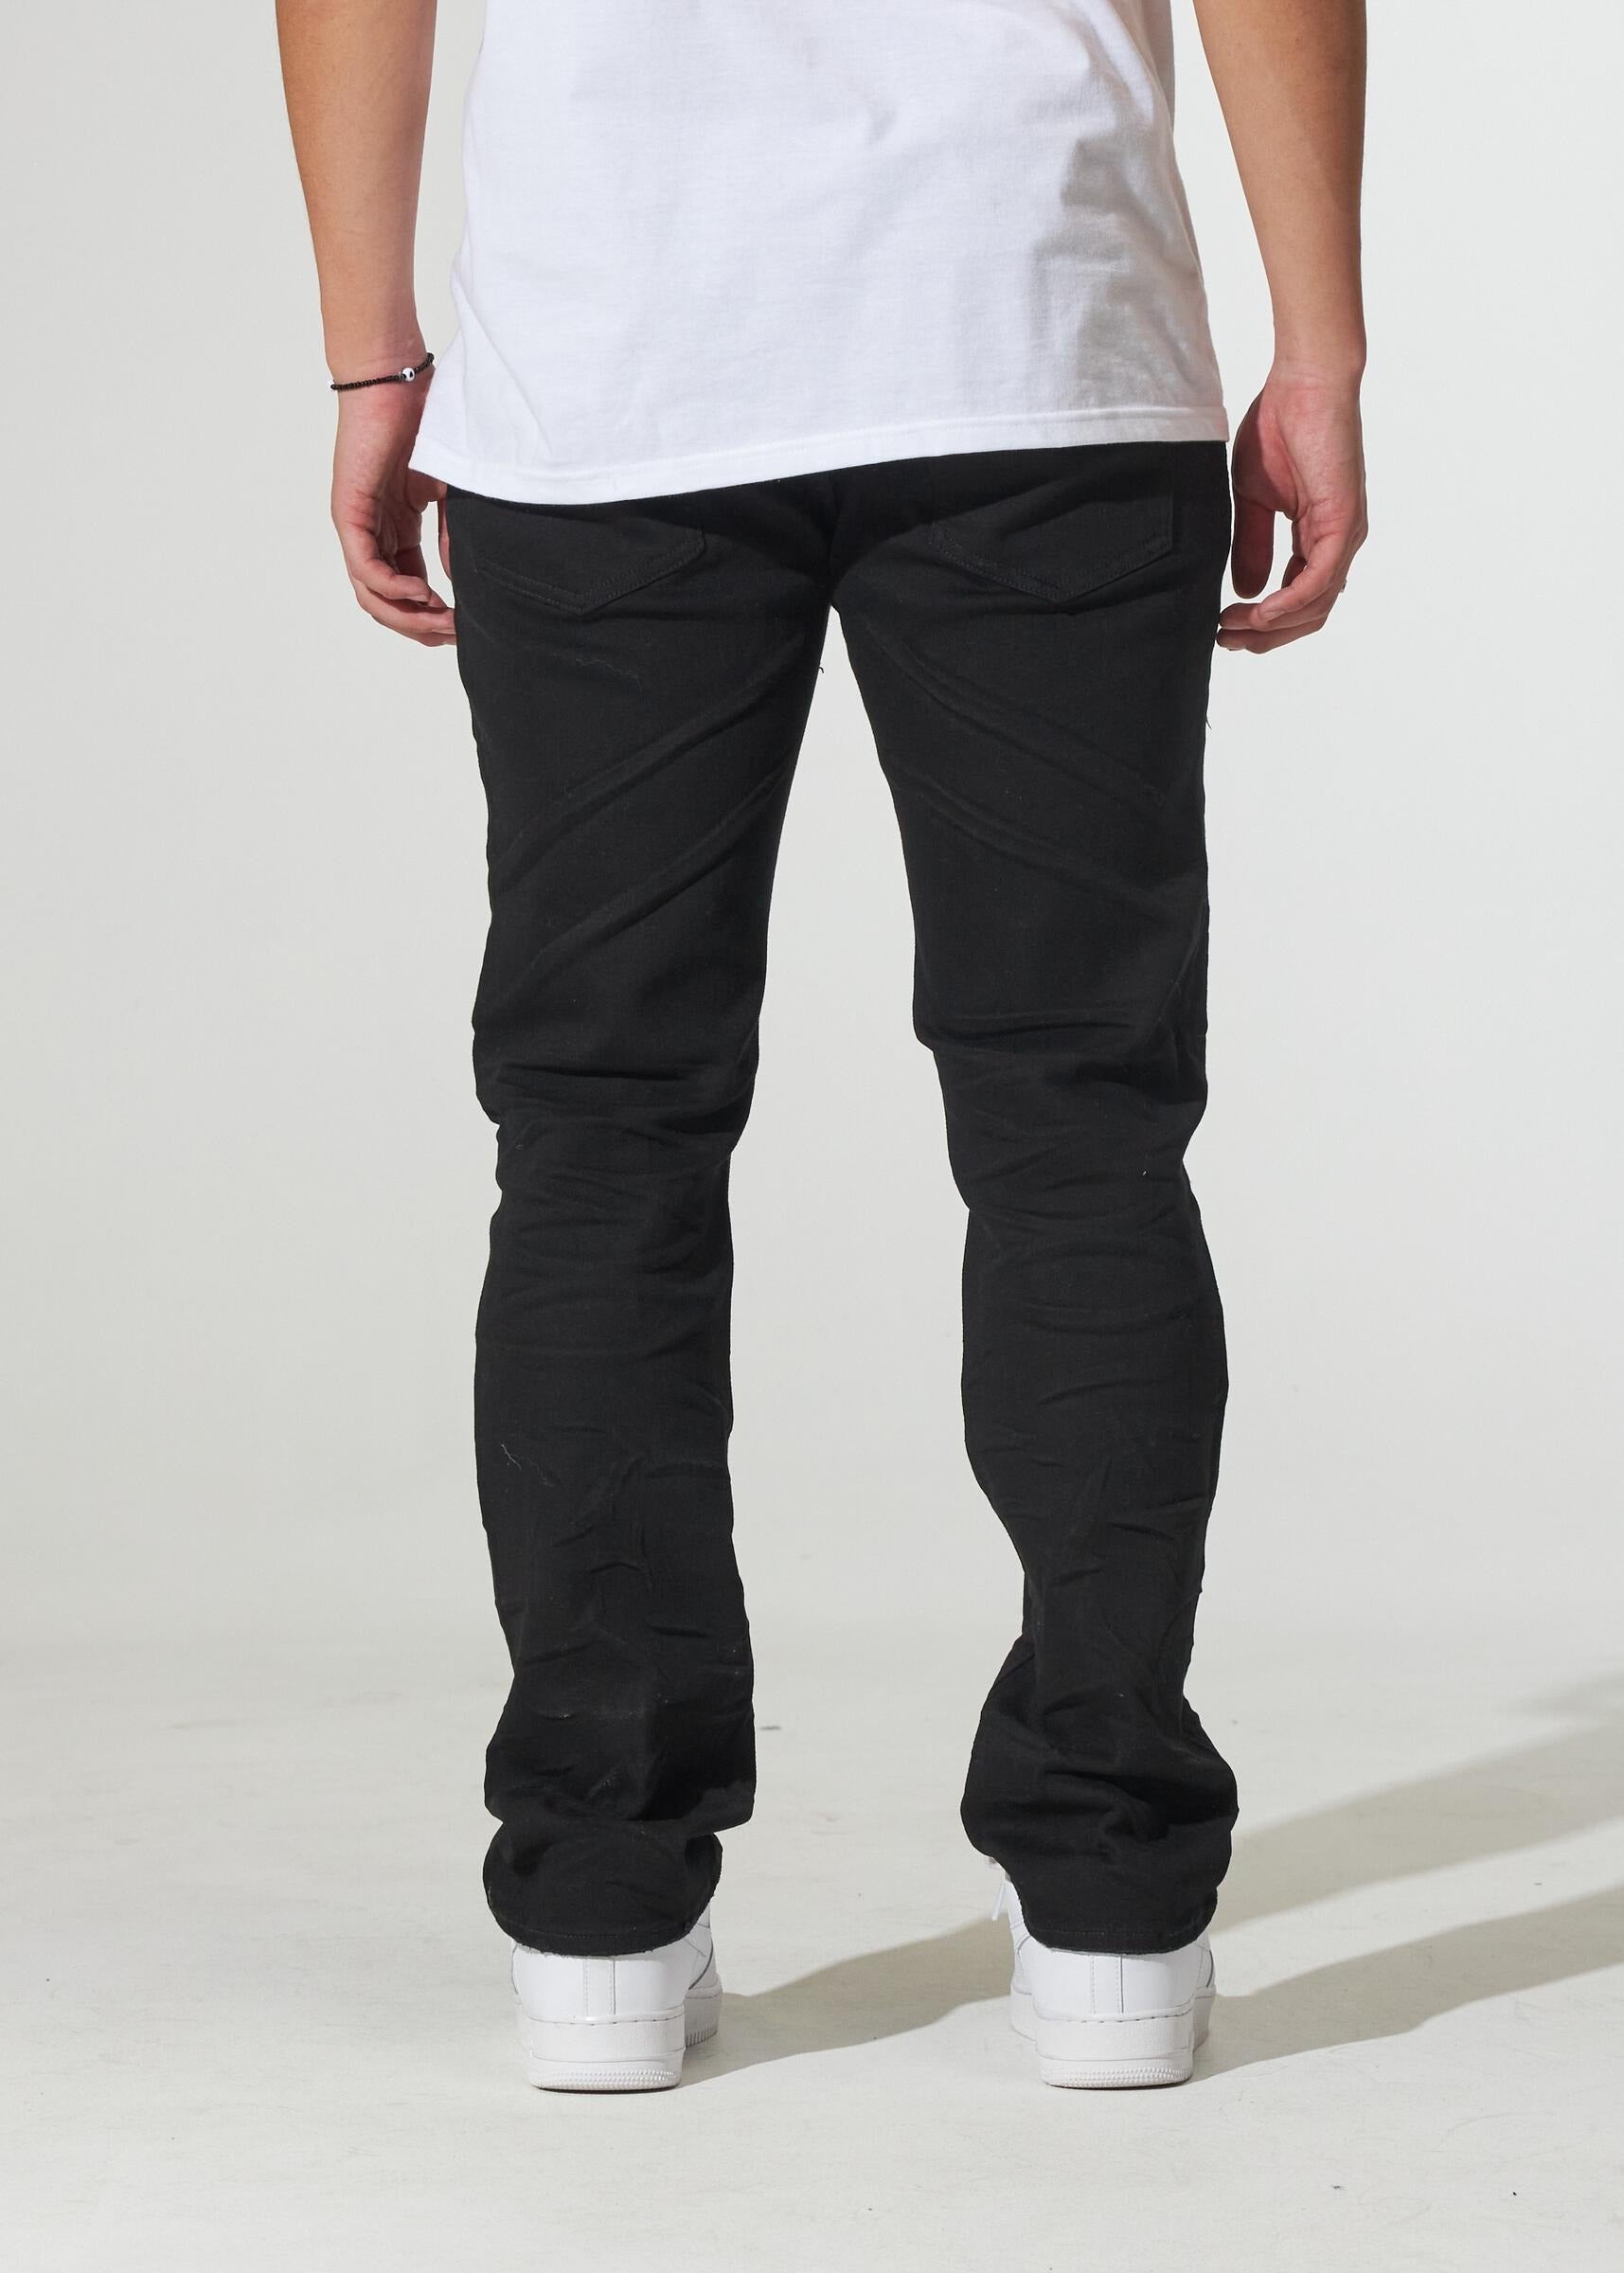 Crysp Denim Jeans - Arch - Black